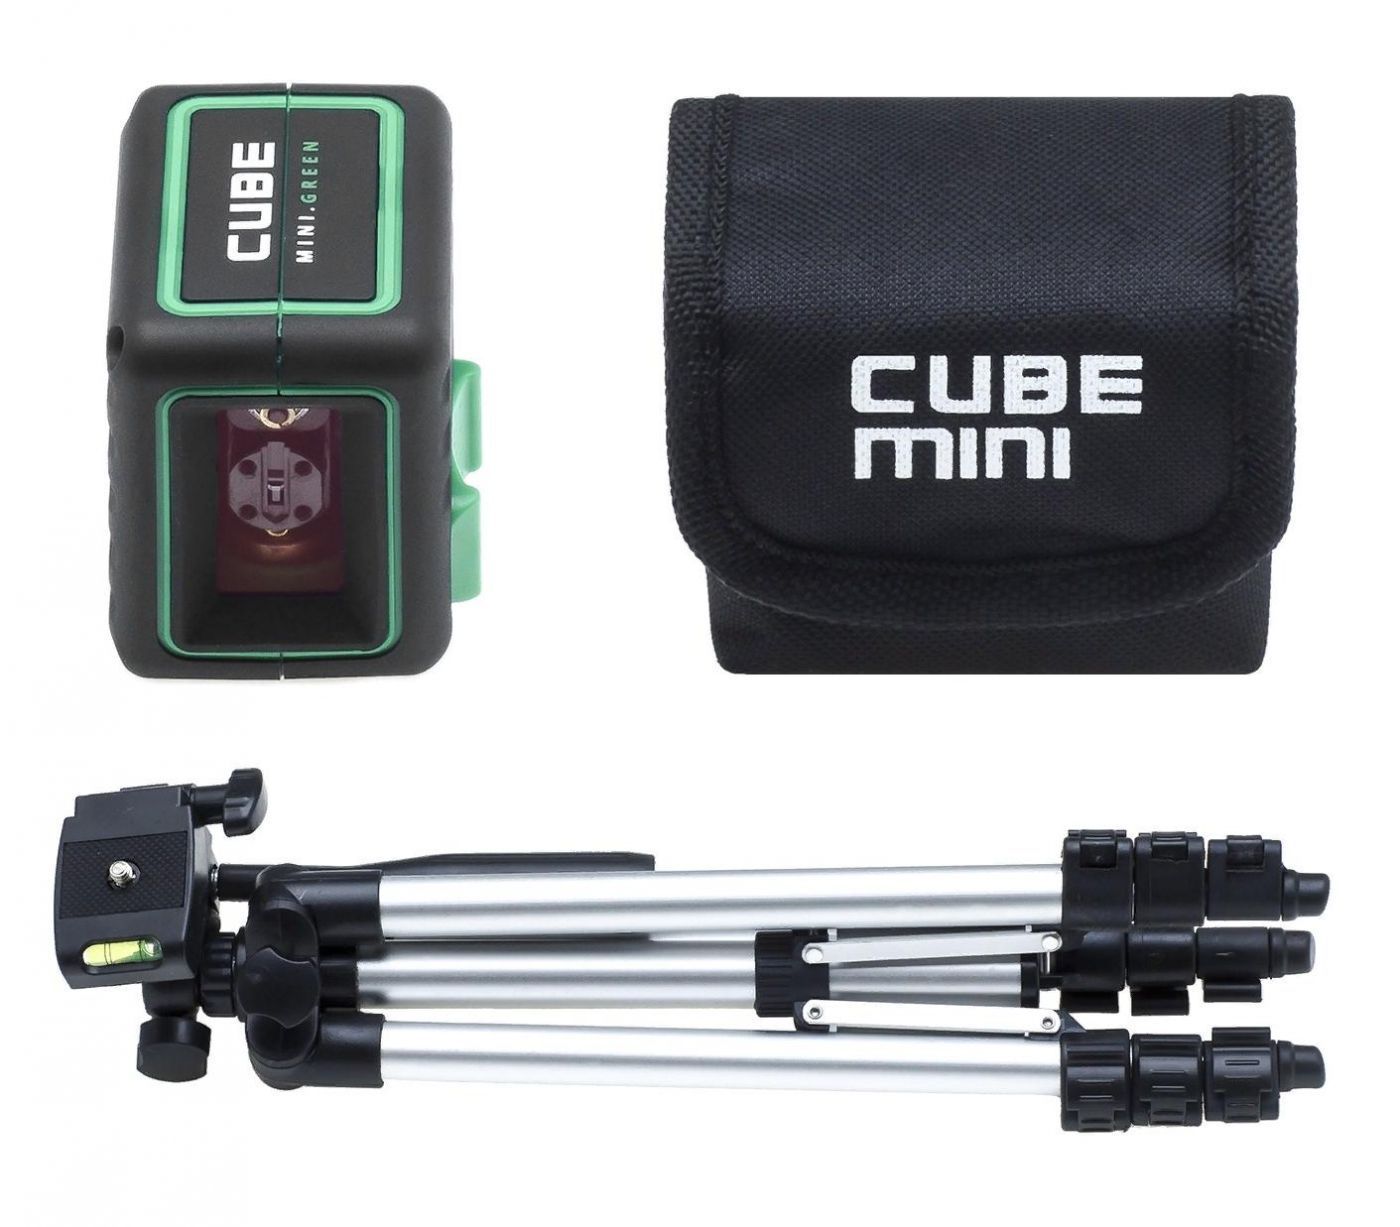 Cube mini green. Ada Cube Mini professional Edition. Ada Cube Mini Basic + Cosmo Micro. Ada instruments Cube 3d Ultimate Edition (а00385) со штативом. Ada Cube Mini в работе.